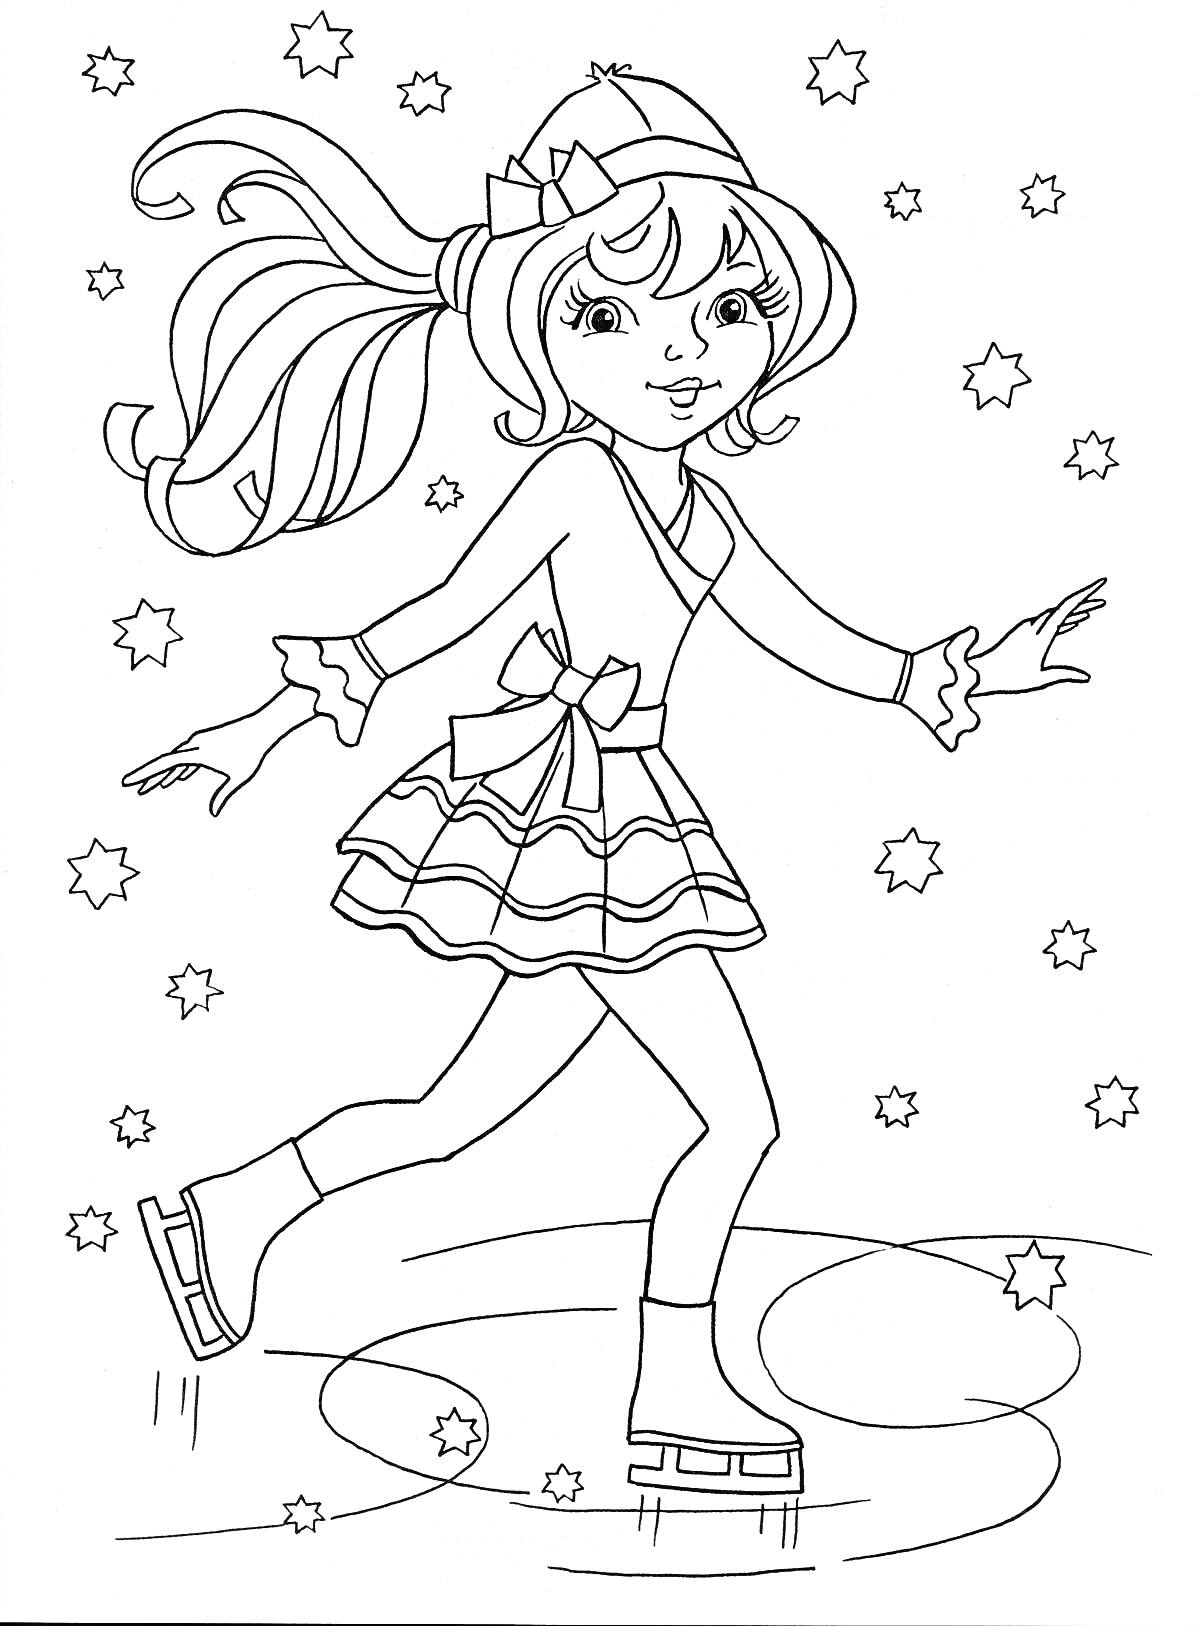 Раскраска Девочка на коньках среди звезд